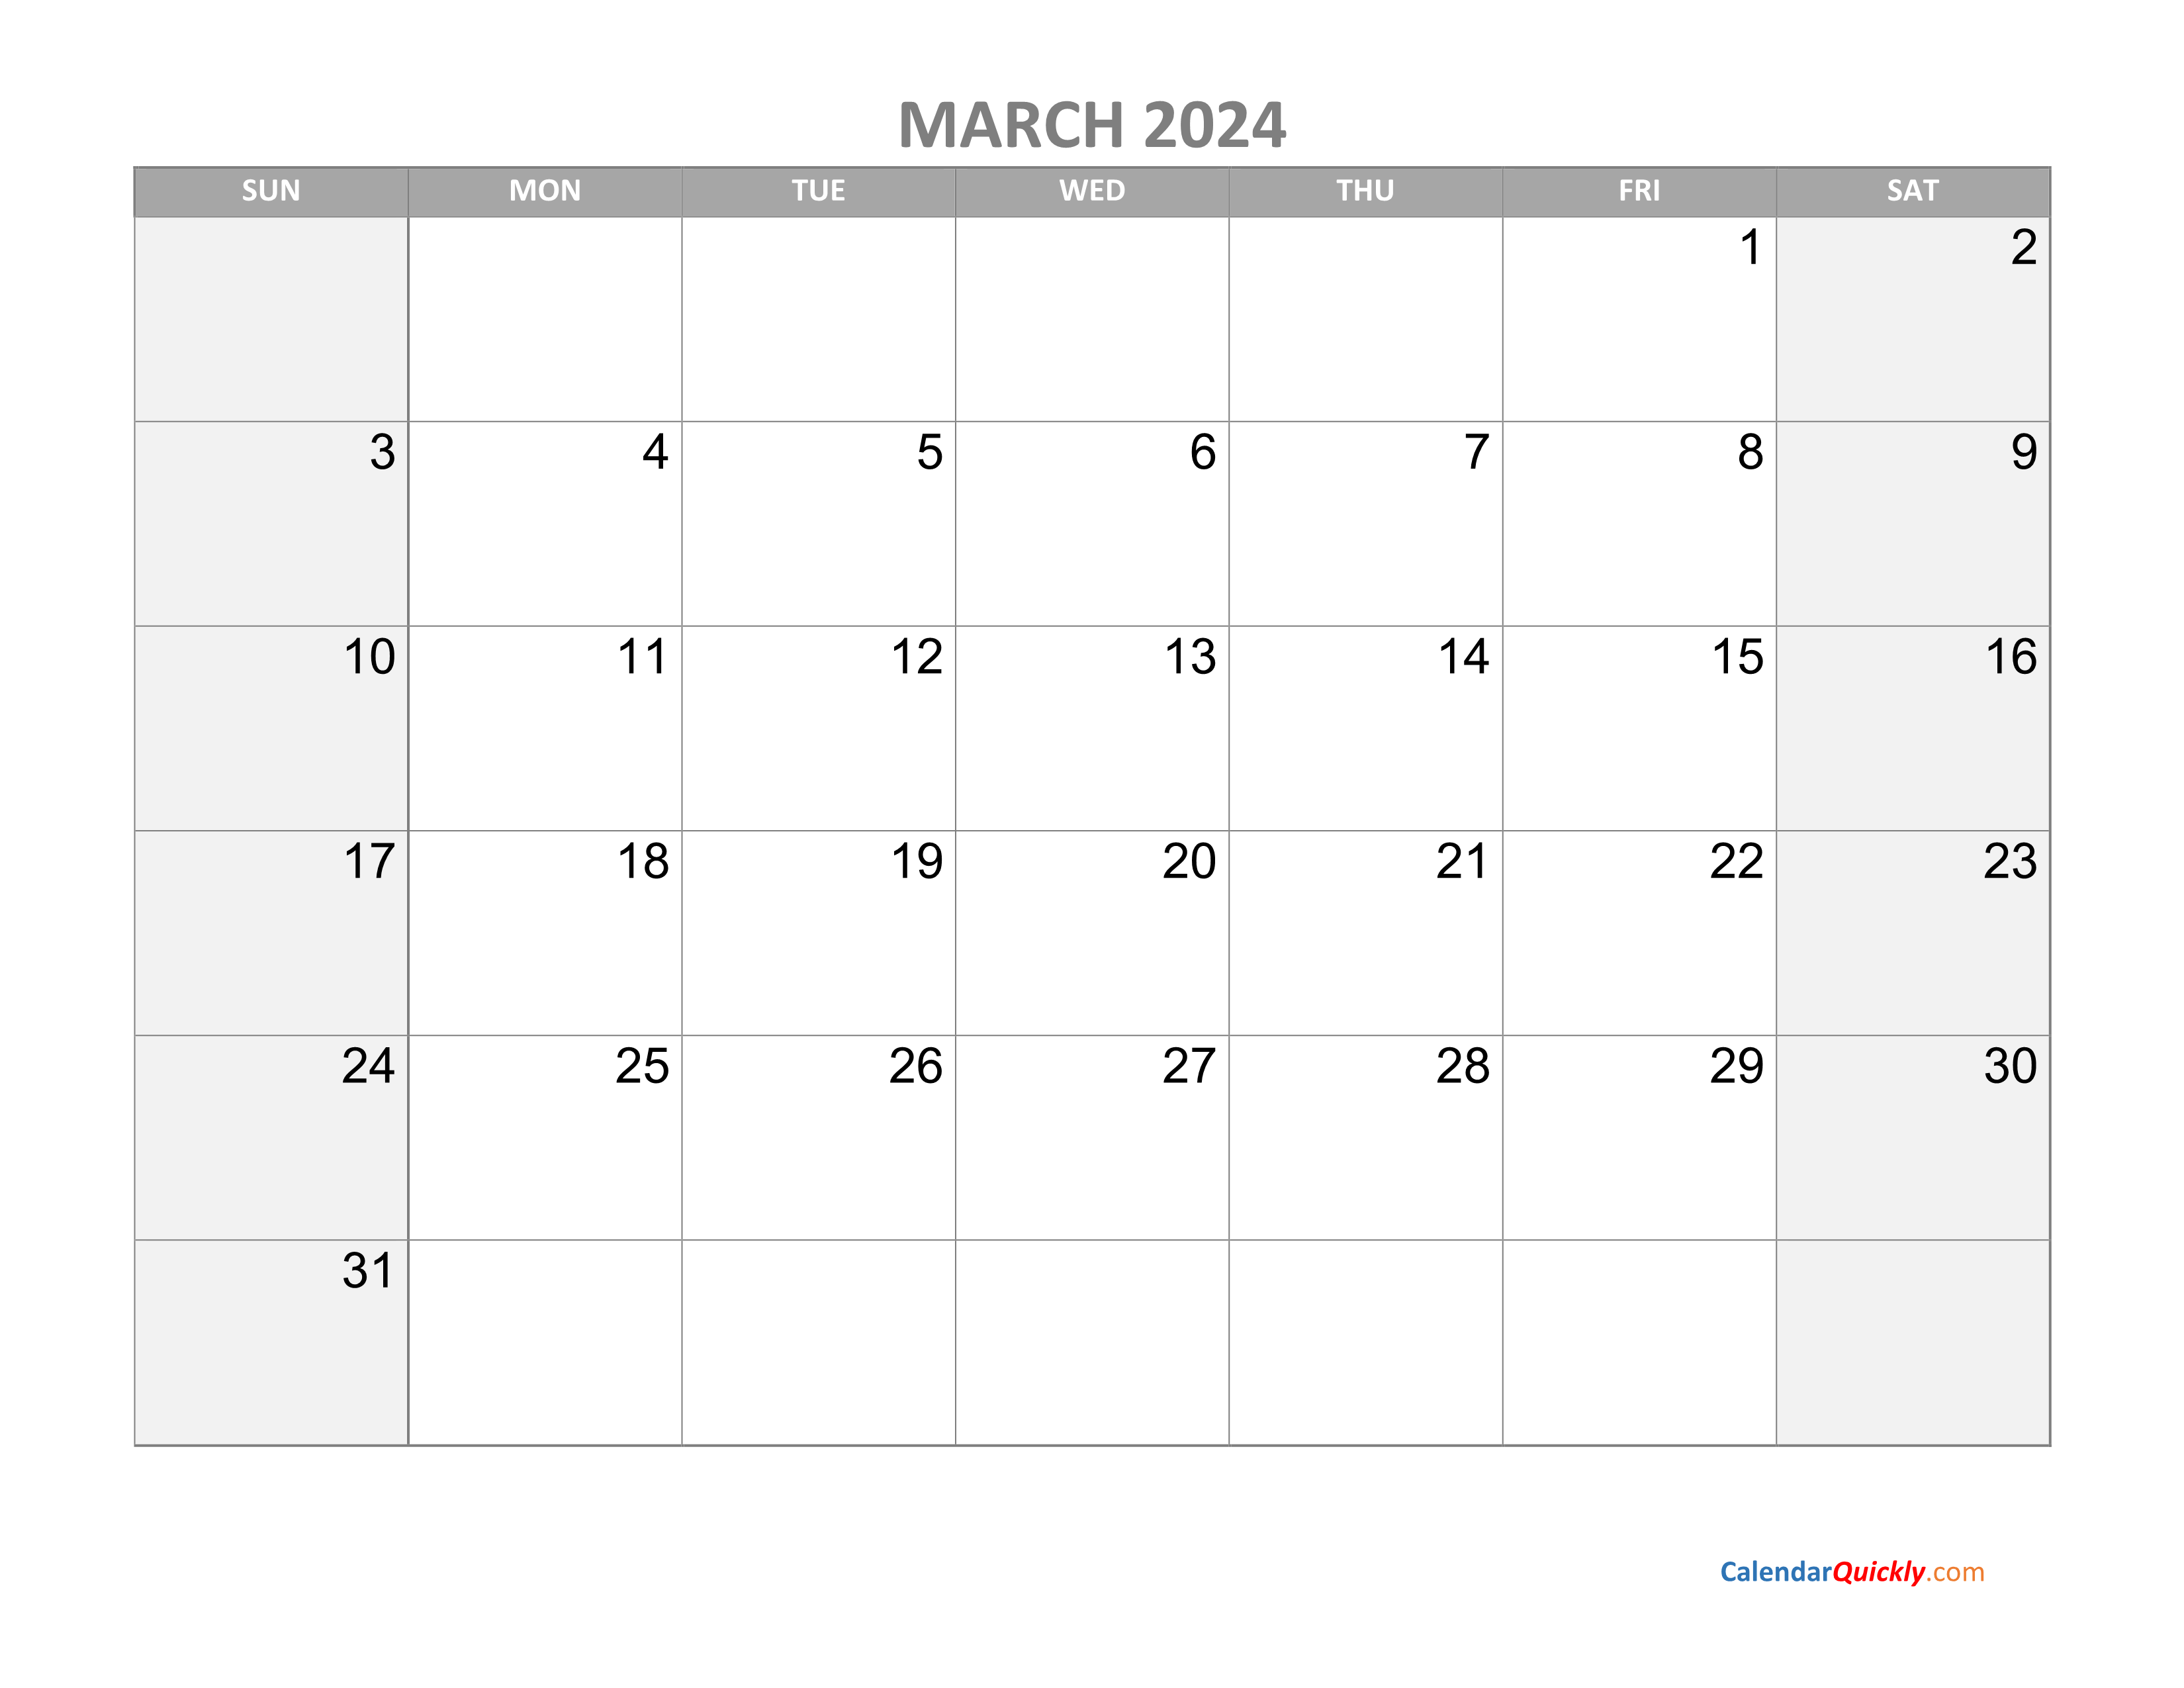 March Calendar 2024 with Holidays Calendar Quickly